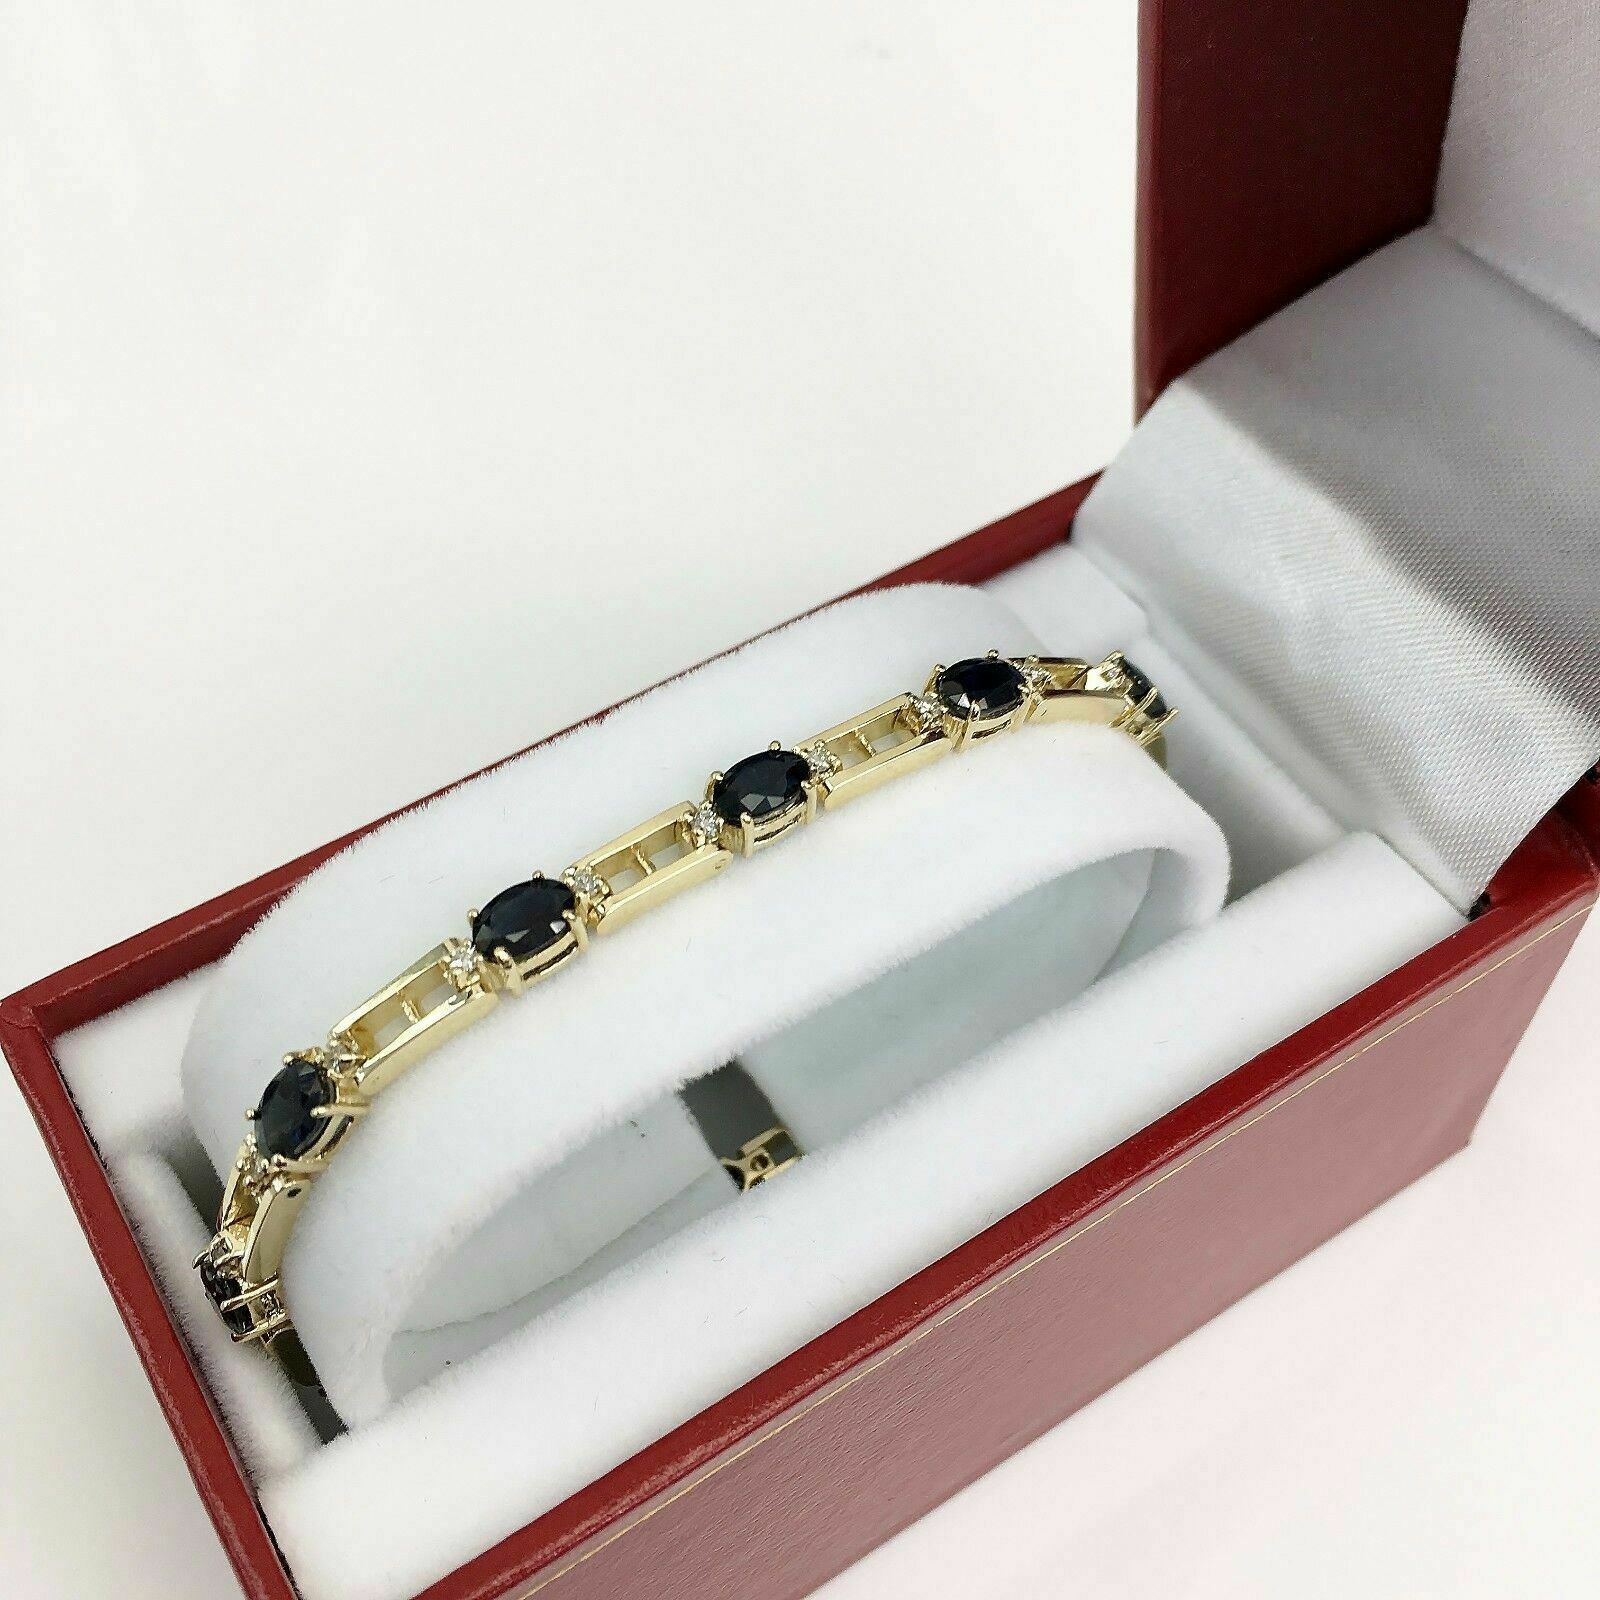 8.42 Caratst.w. Diamond and Sapphire Custom Made Tennis Bracelet 14K Gold 12 Gr